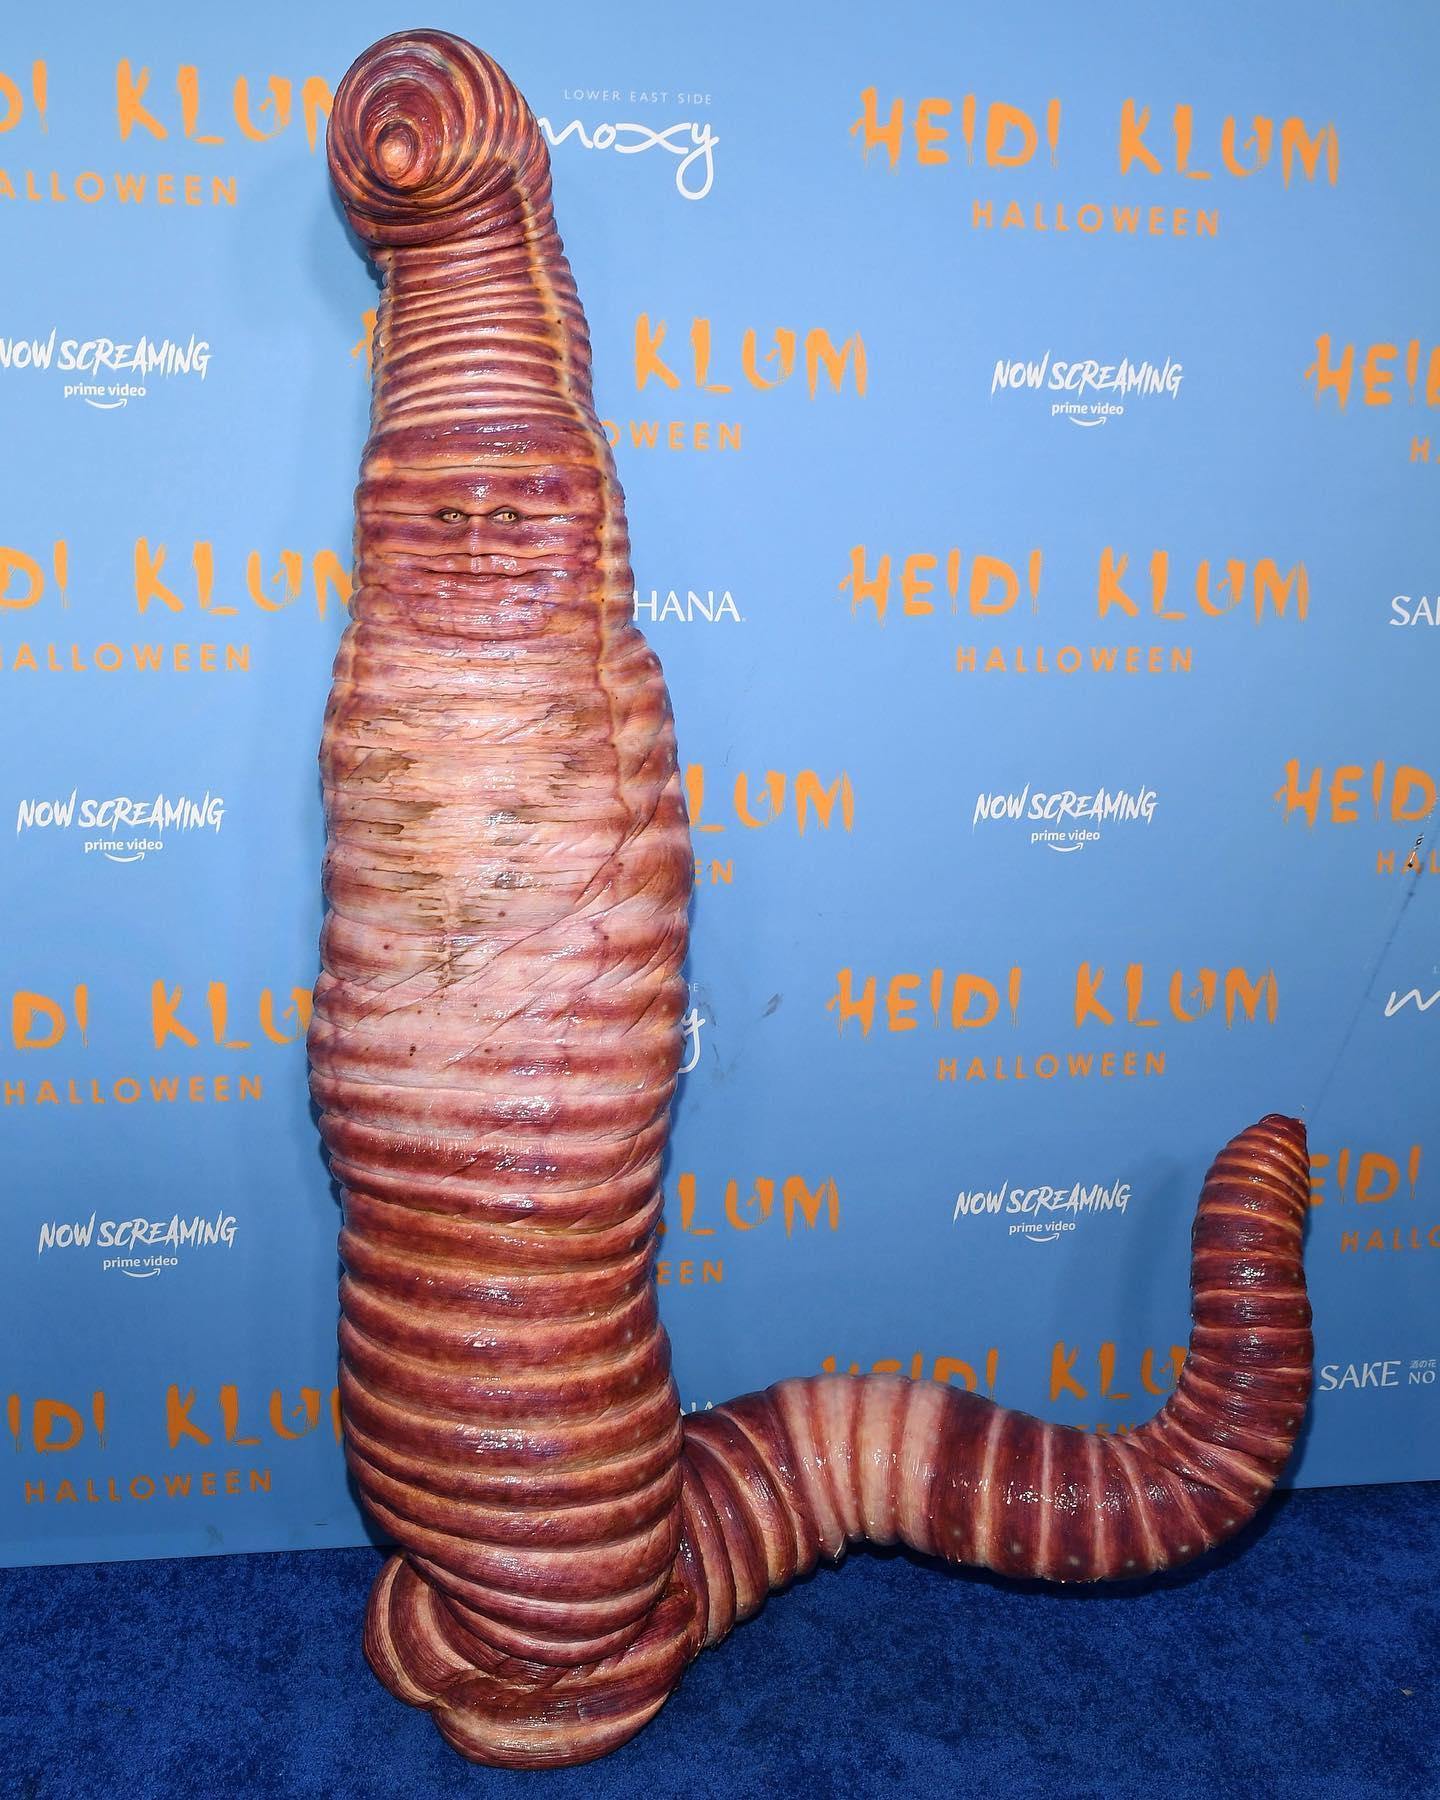 Heidi Klum and Tom Kaulitz pose as a worm and a fisherman for Halloween